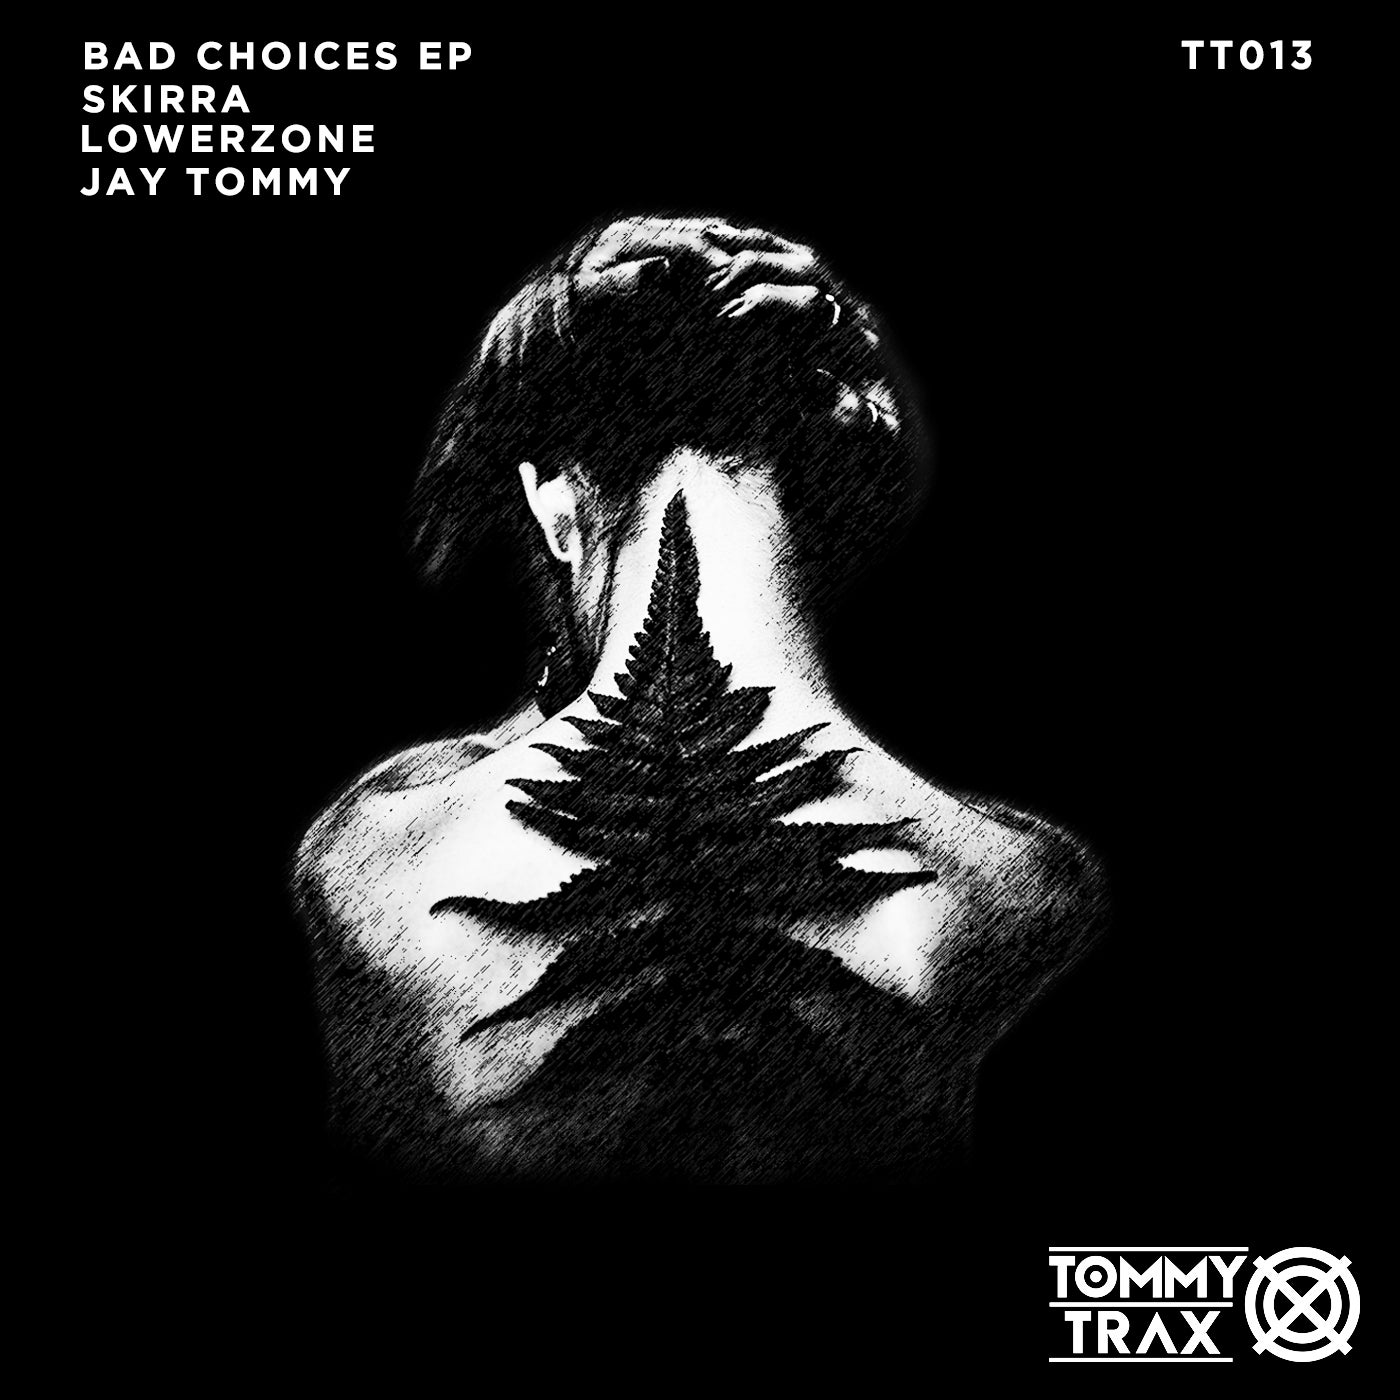 Bad Choices EP